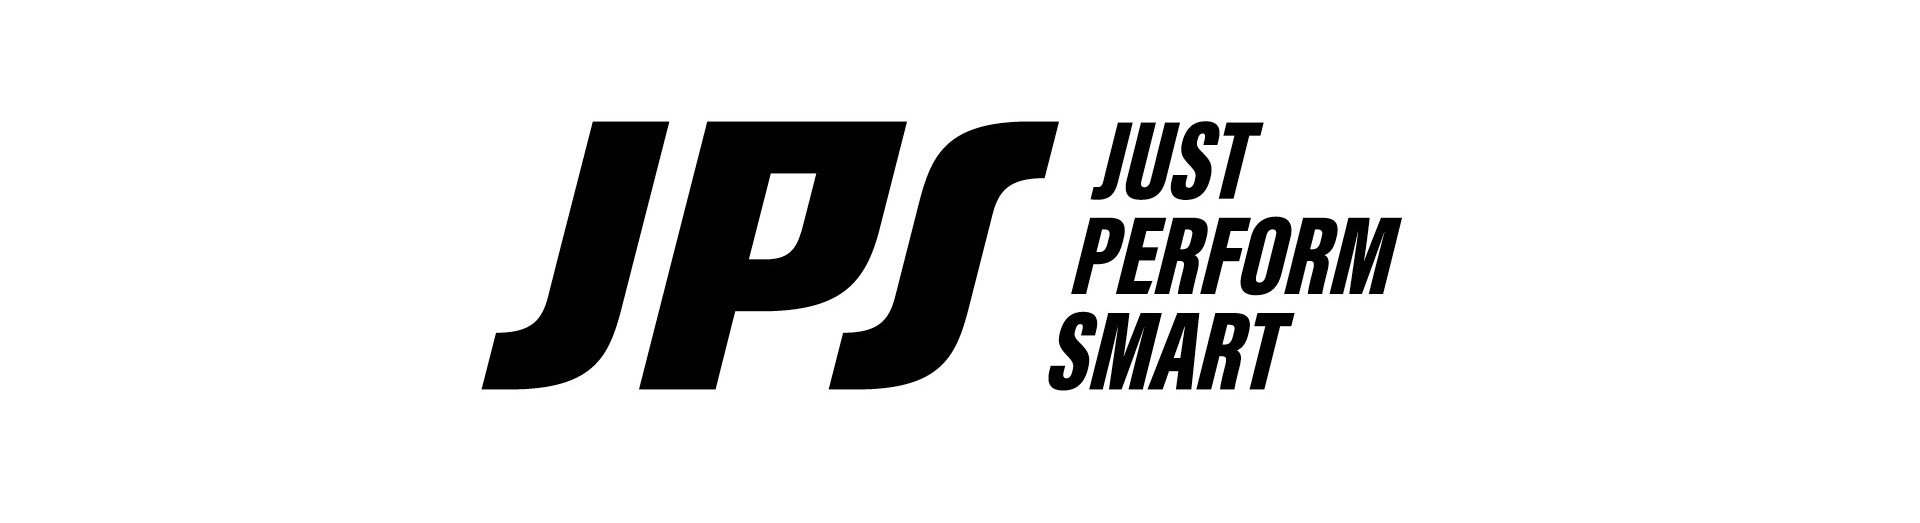 Just perform smart Logo